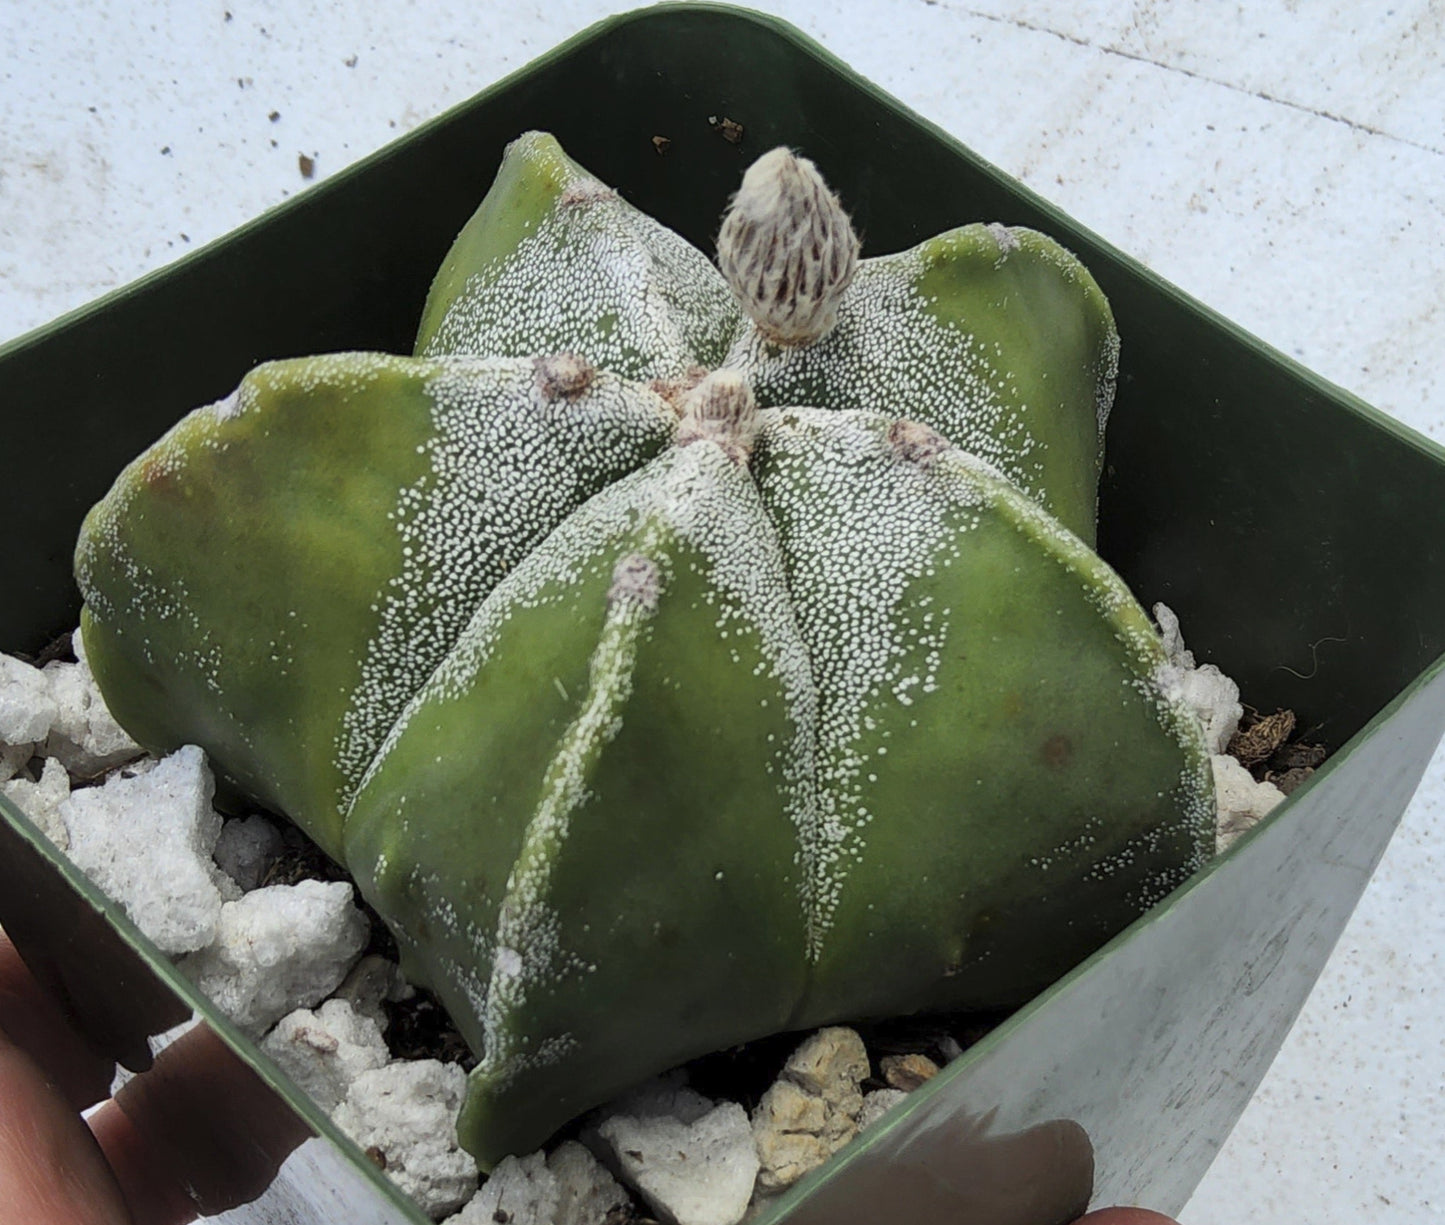 Astrophytum myriostigma Live Cactus In 4 Inch